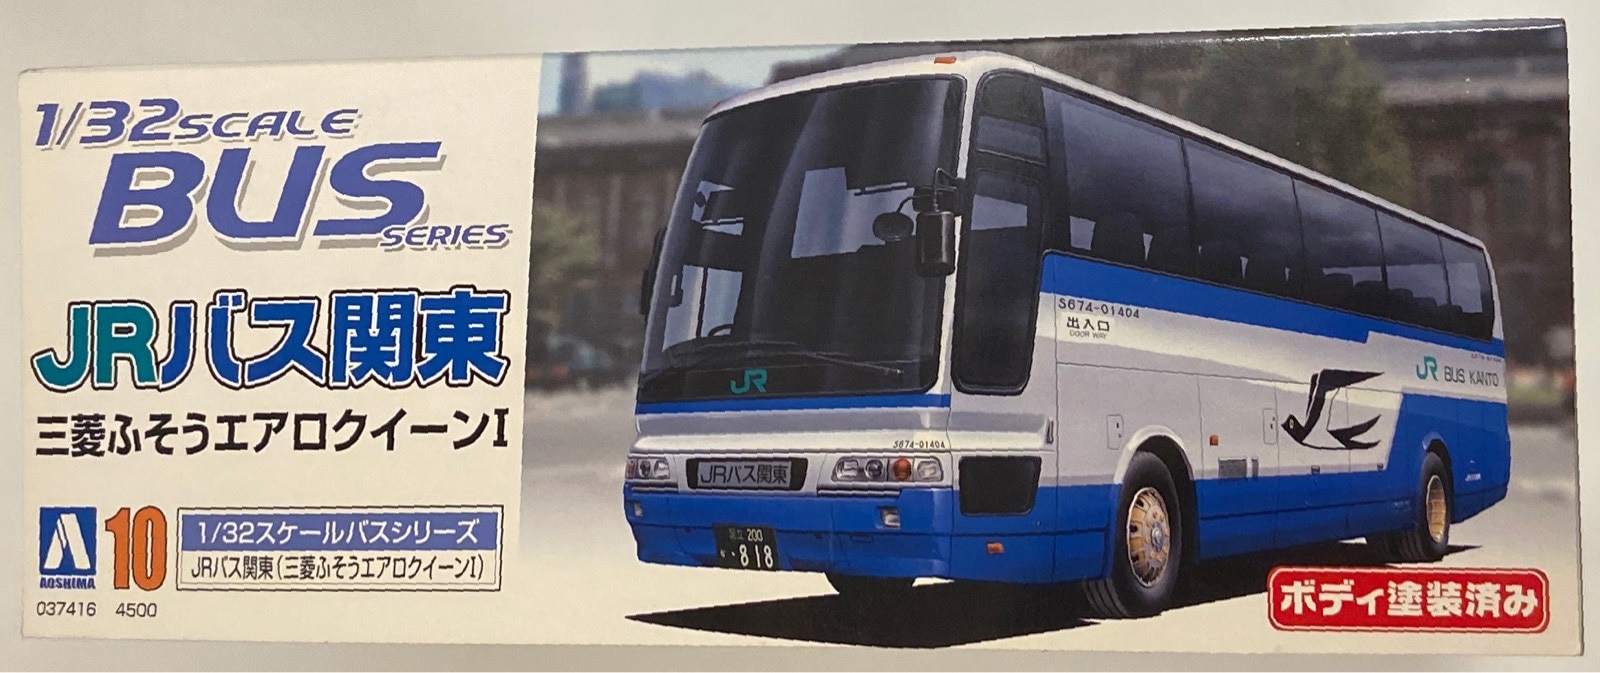 1/32 JRバス関東(三菱ふそうエアロクイーンⅠ) 素人組立品